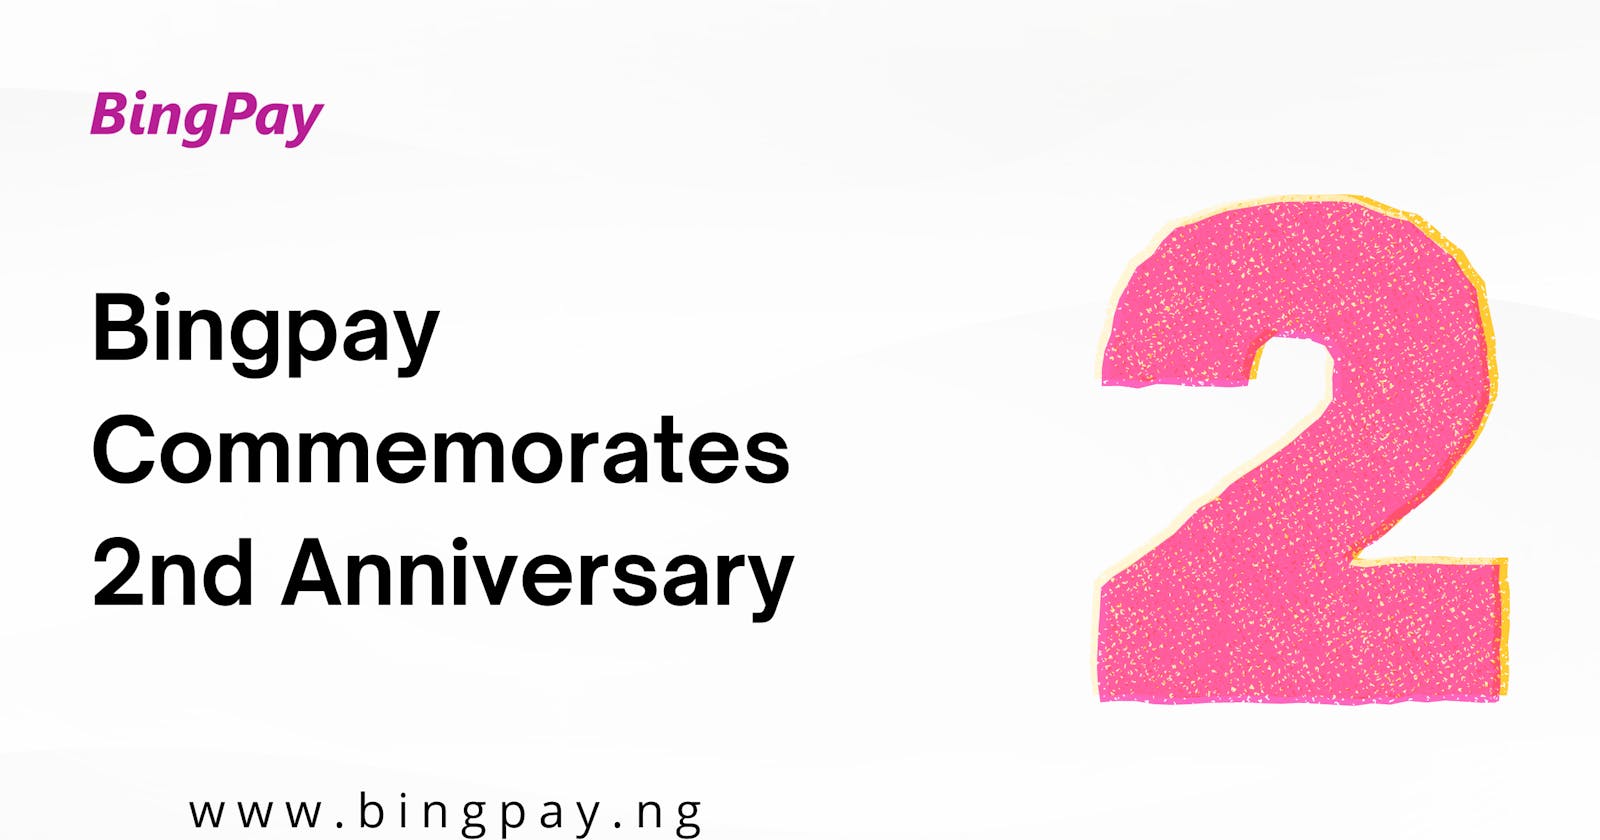 Bingpay Commemorates 2nd Anniversary